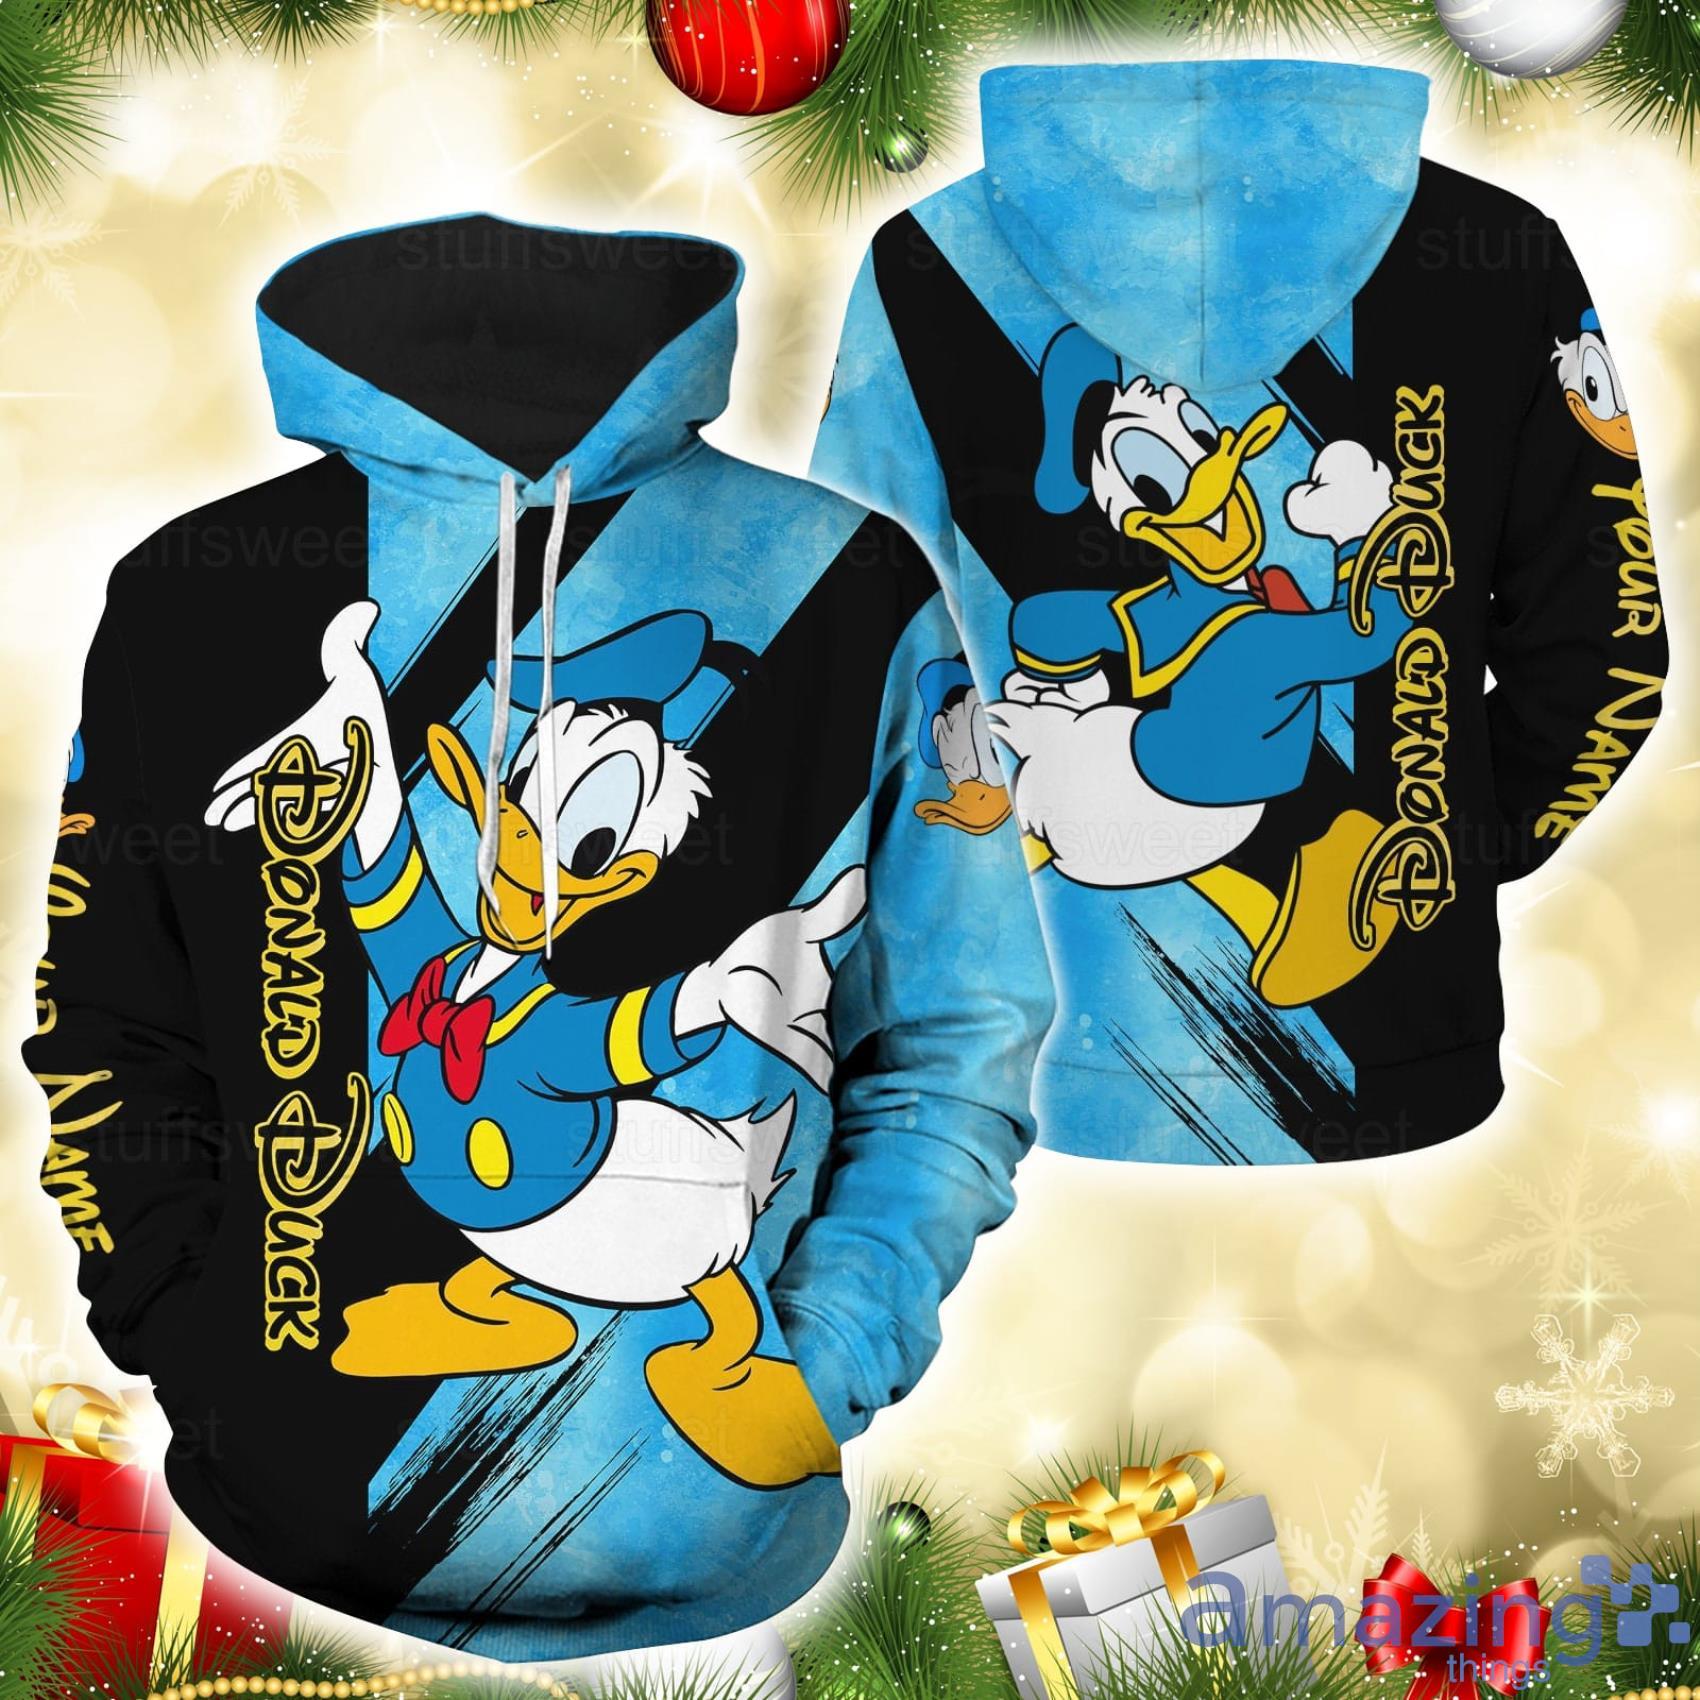 Donald Duck Blue Yellow Jersey, Disney Custom Baseball Jersey